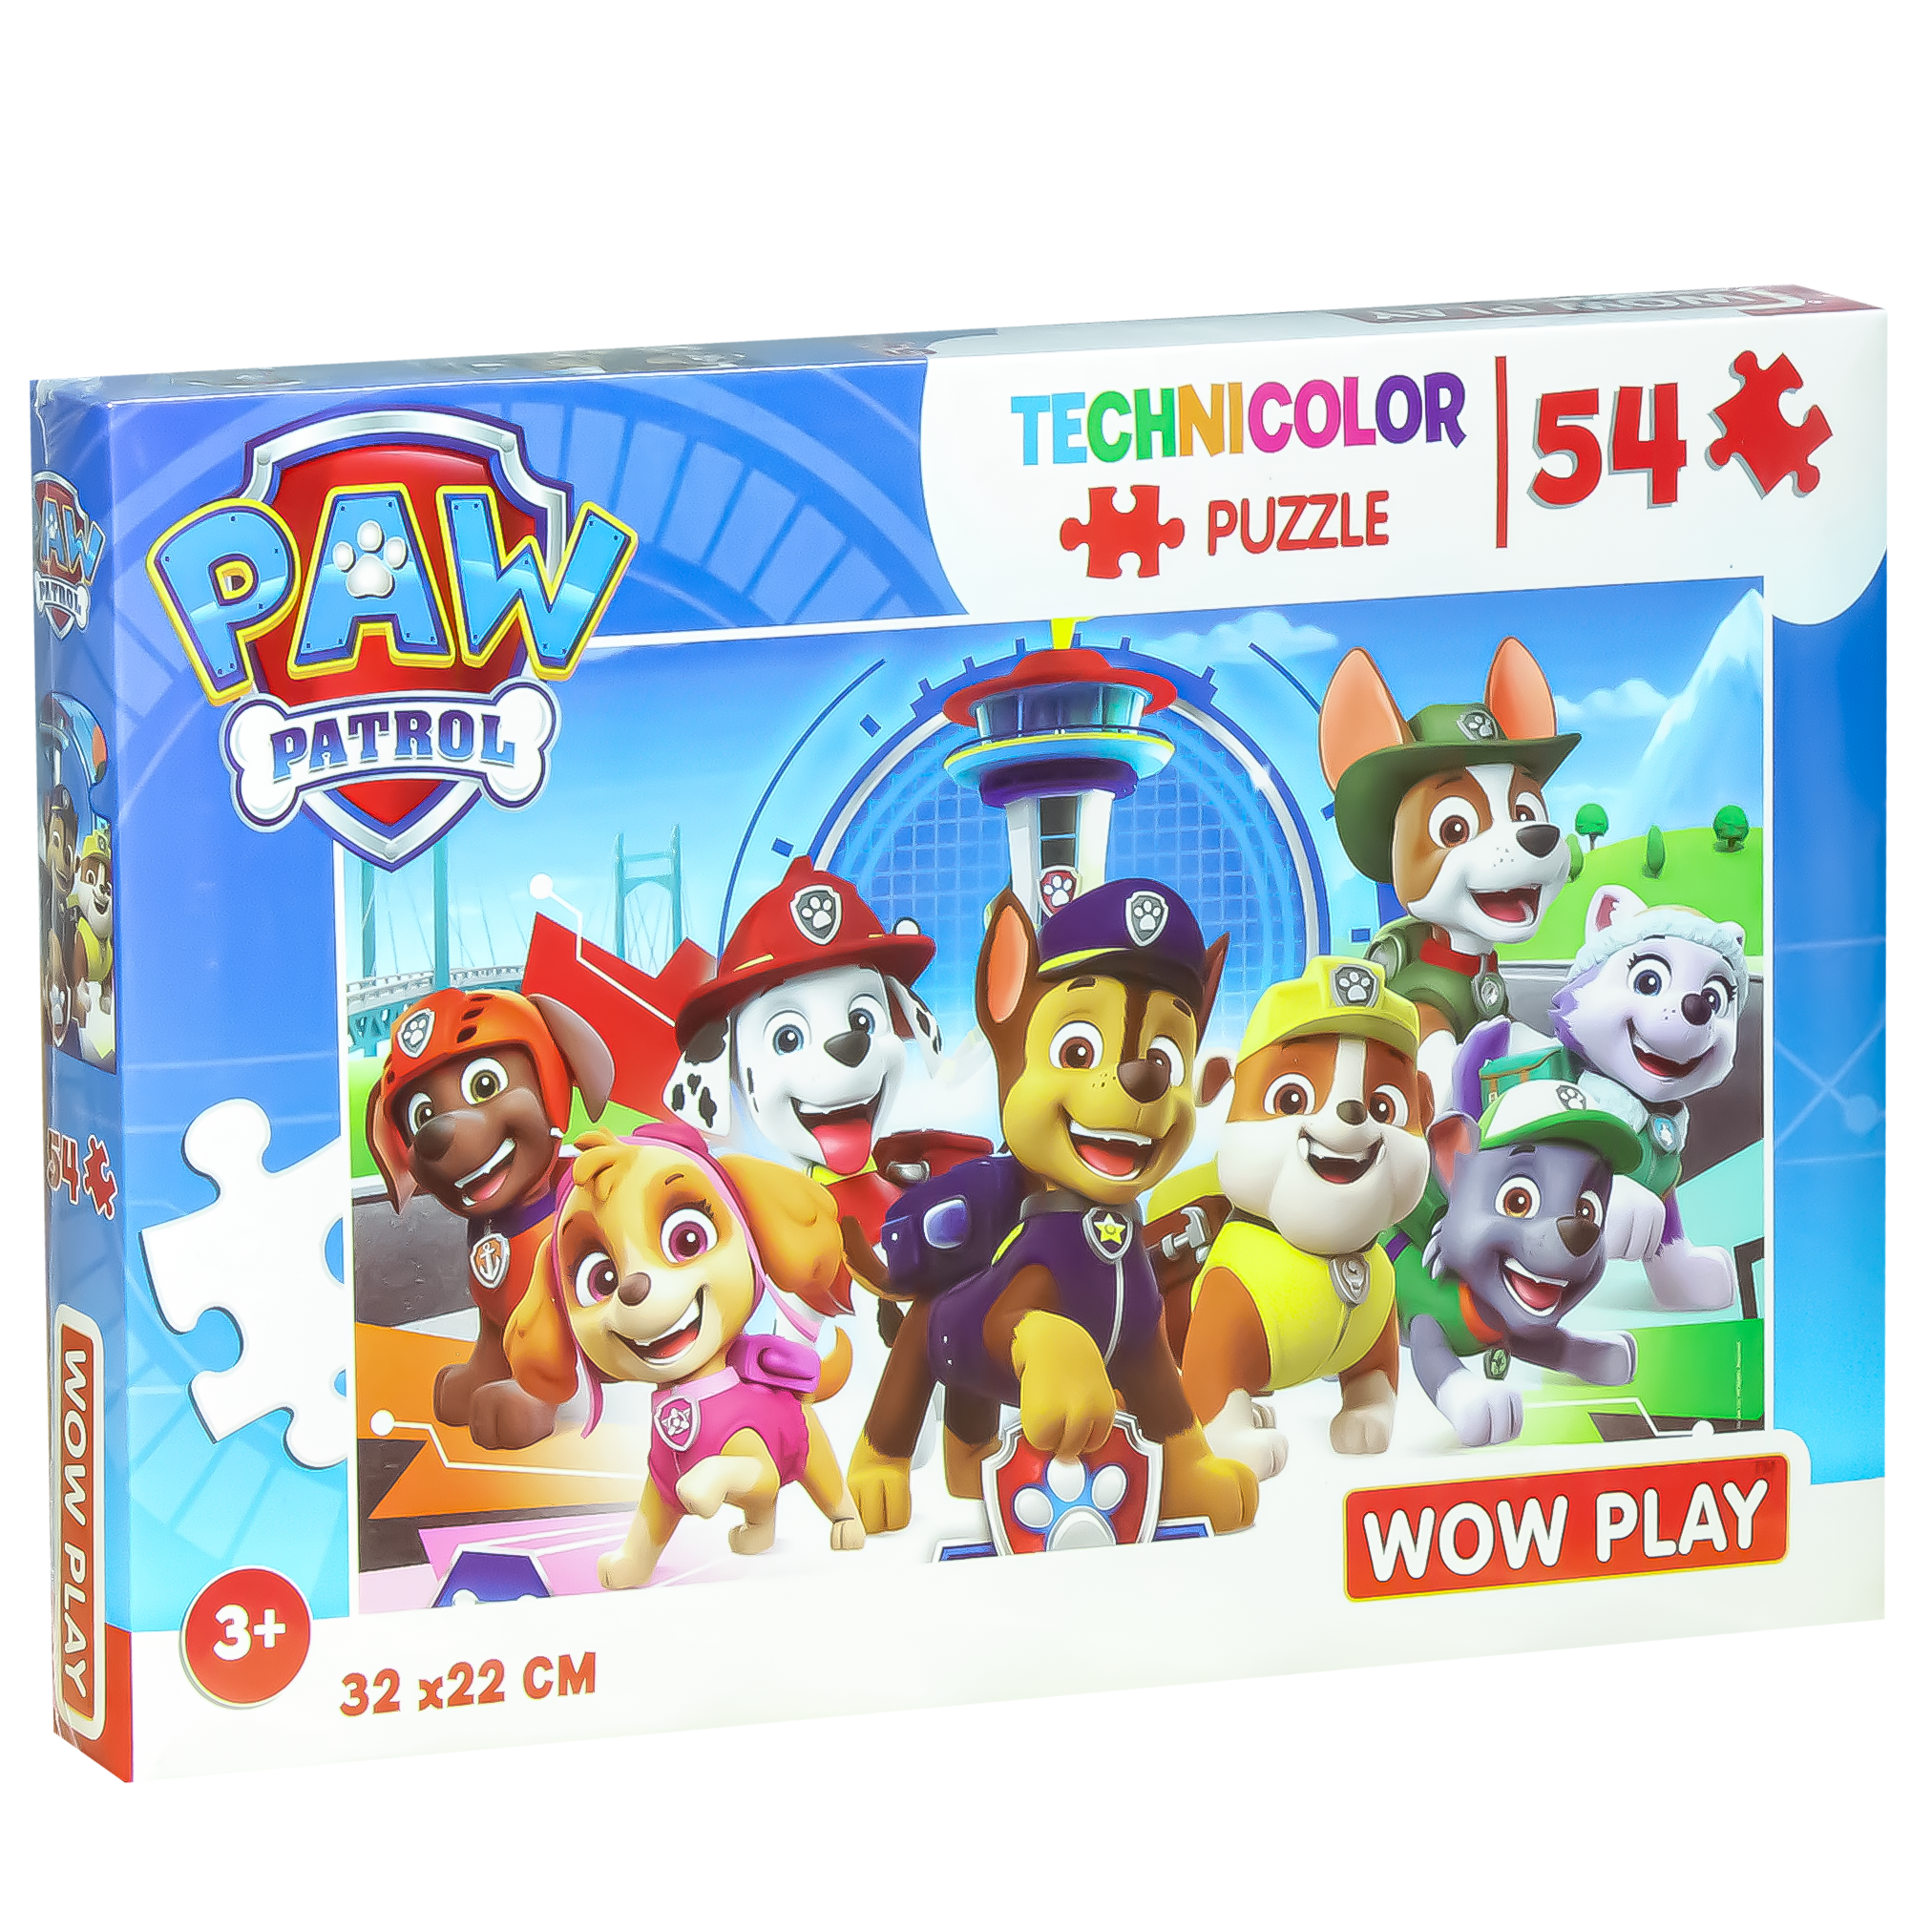 Wow Play Technicolour Puzzle 54 pieces 